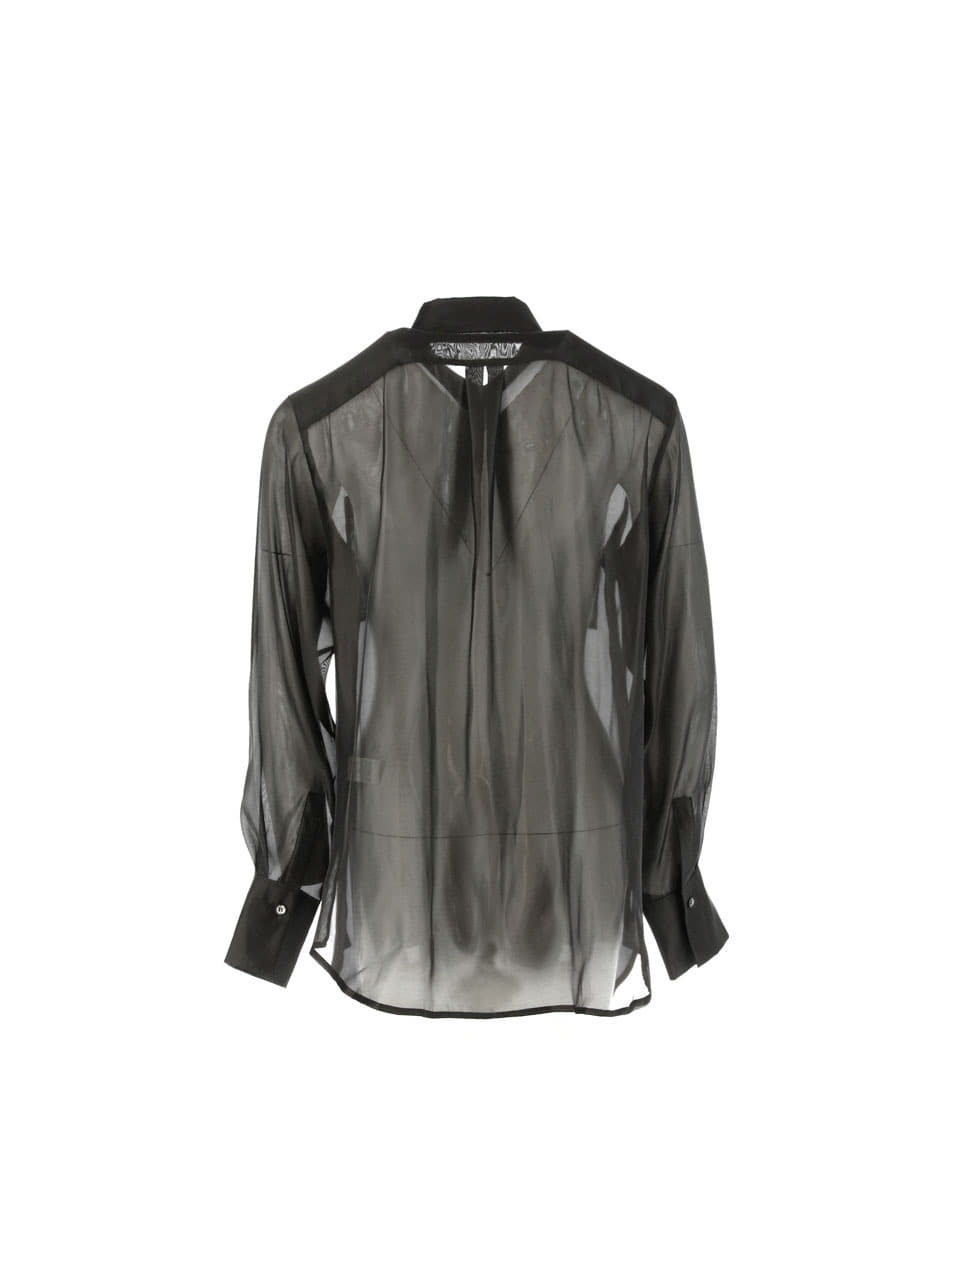 6A Pocket detailed slik organza shirt (Black)